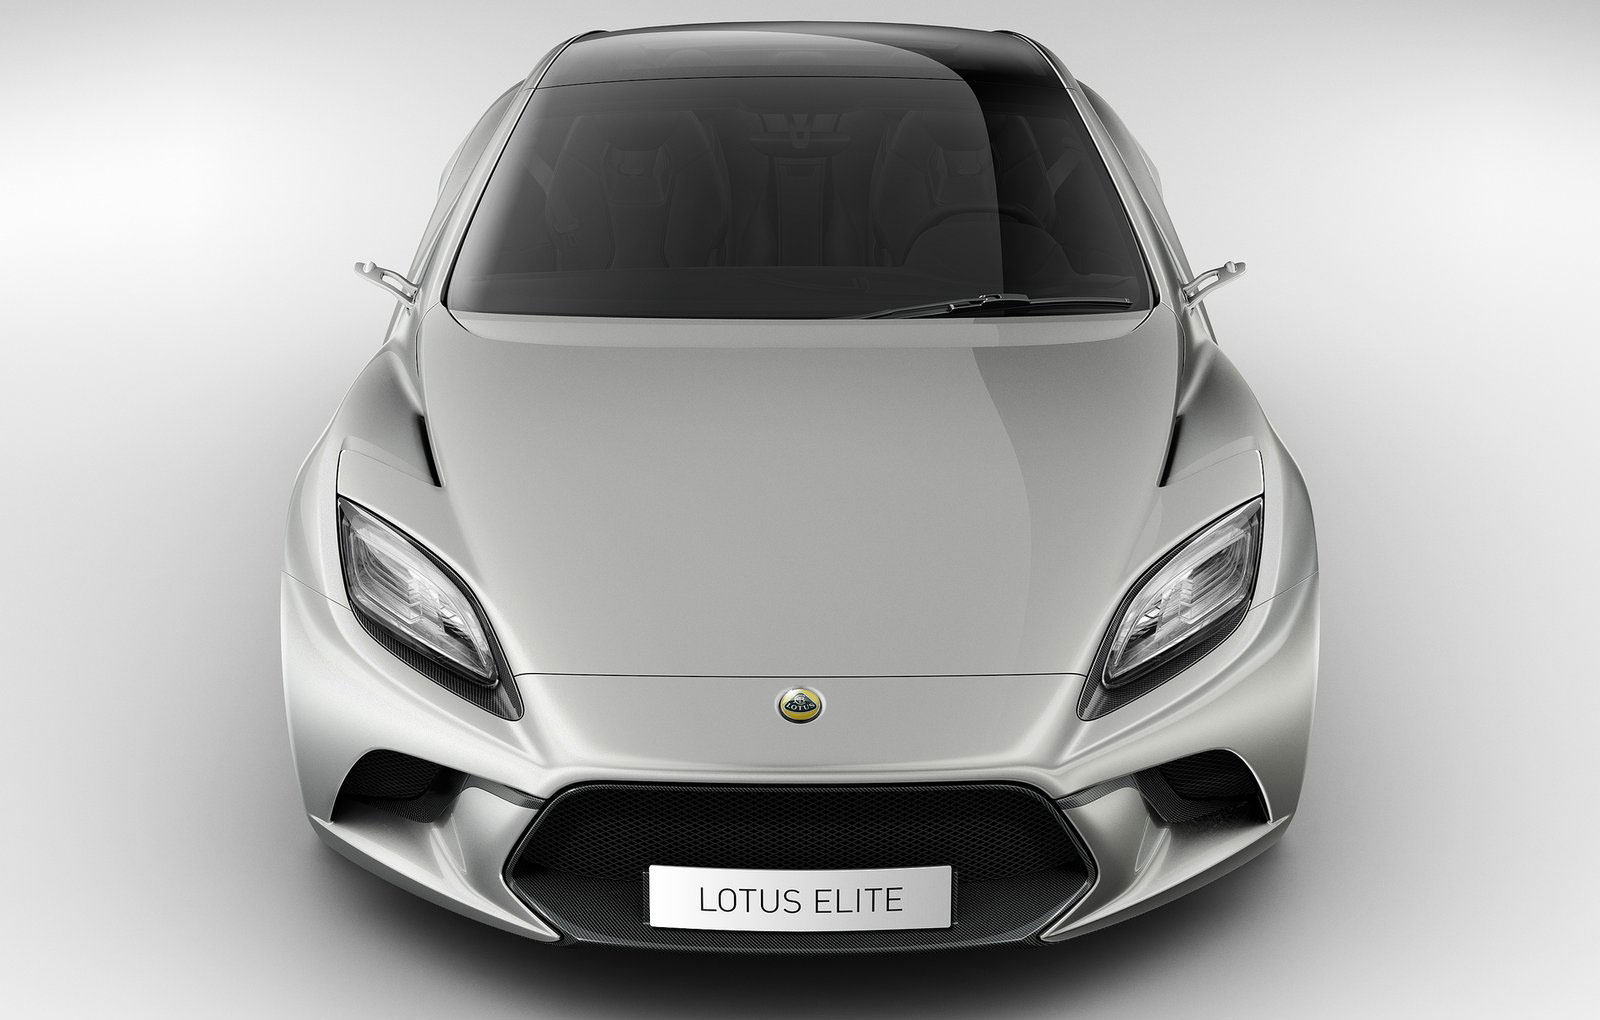 2014 Lotus Elite hybrid